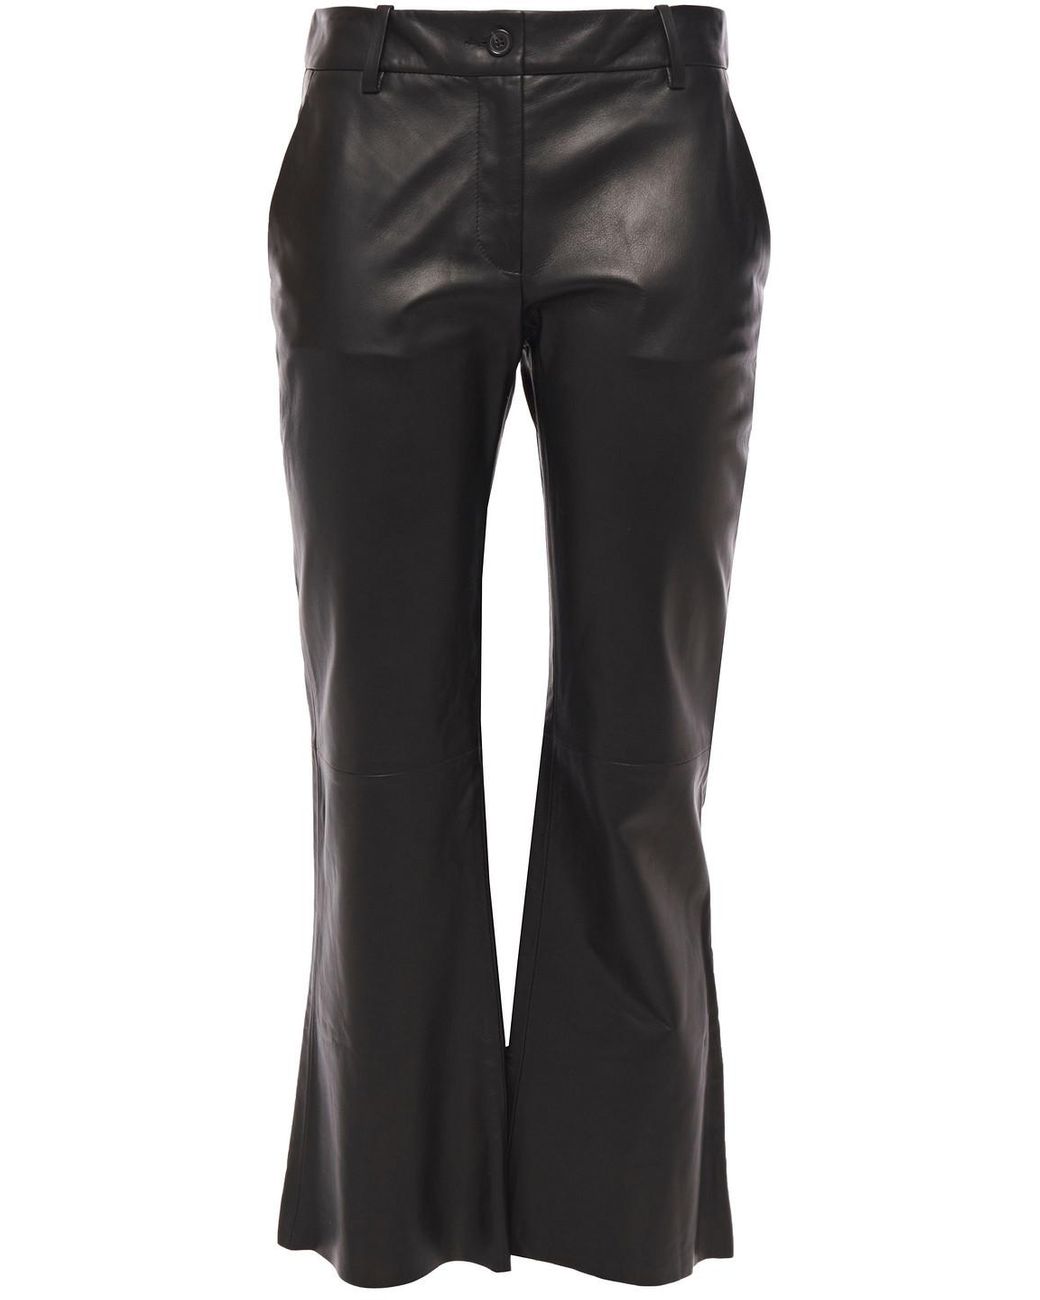 Nili Lotan Caden Leather Kick-flare Pants in Black - Lyst